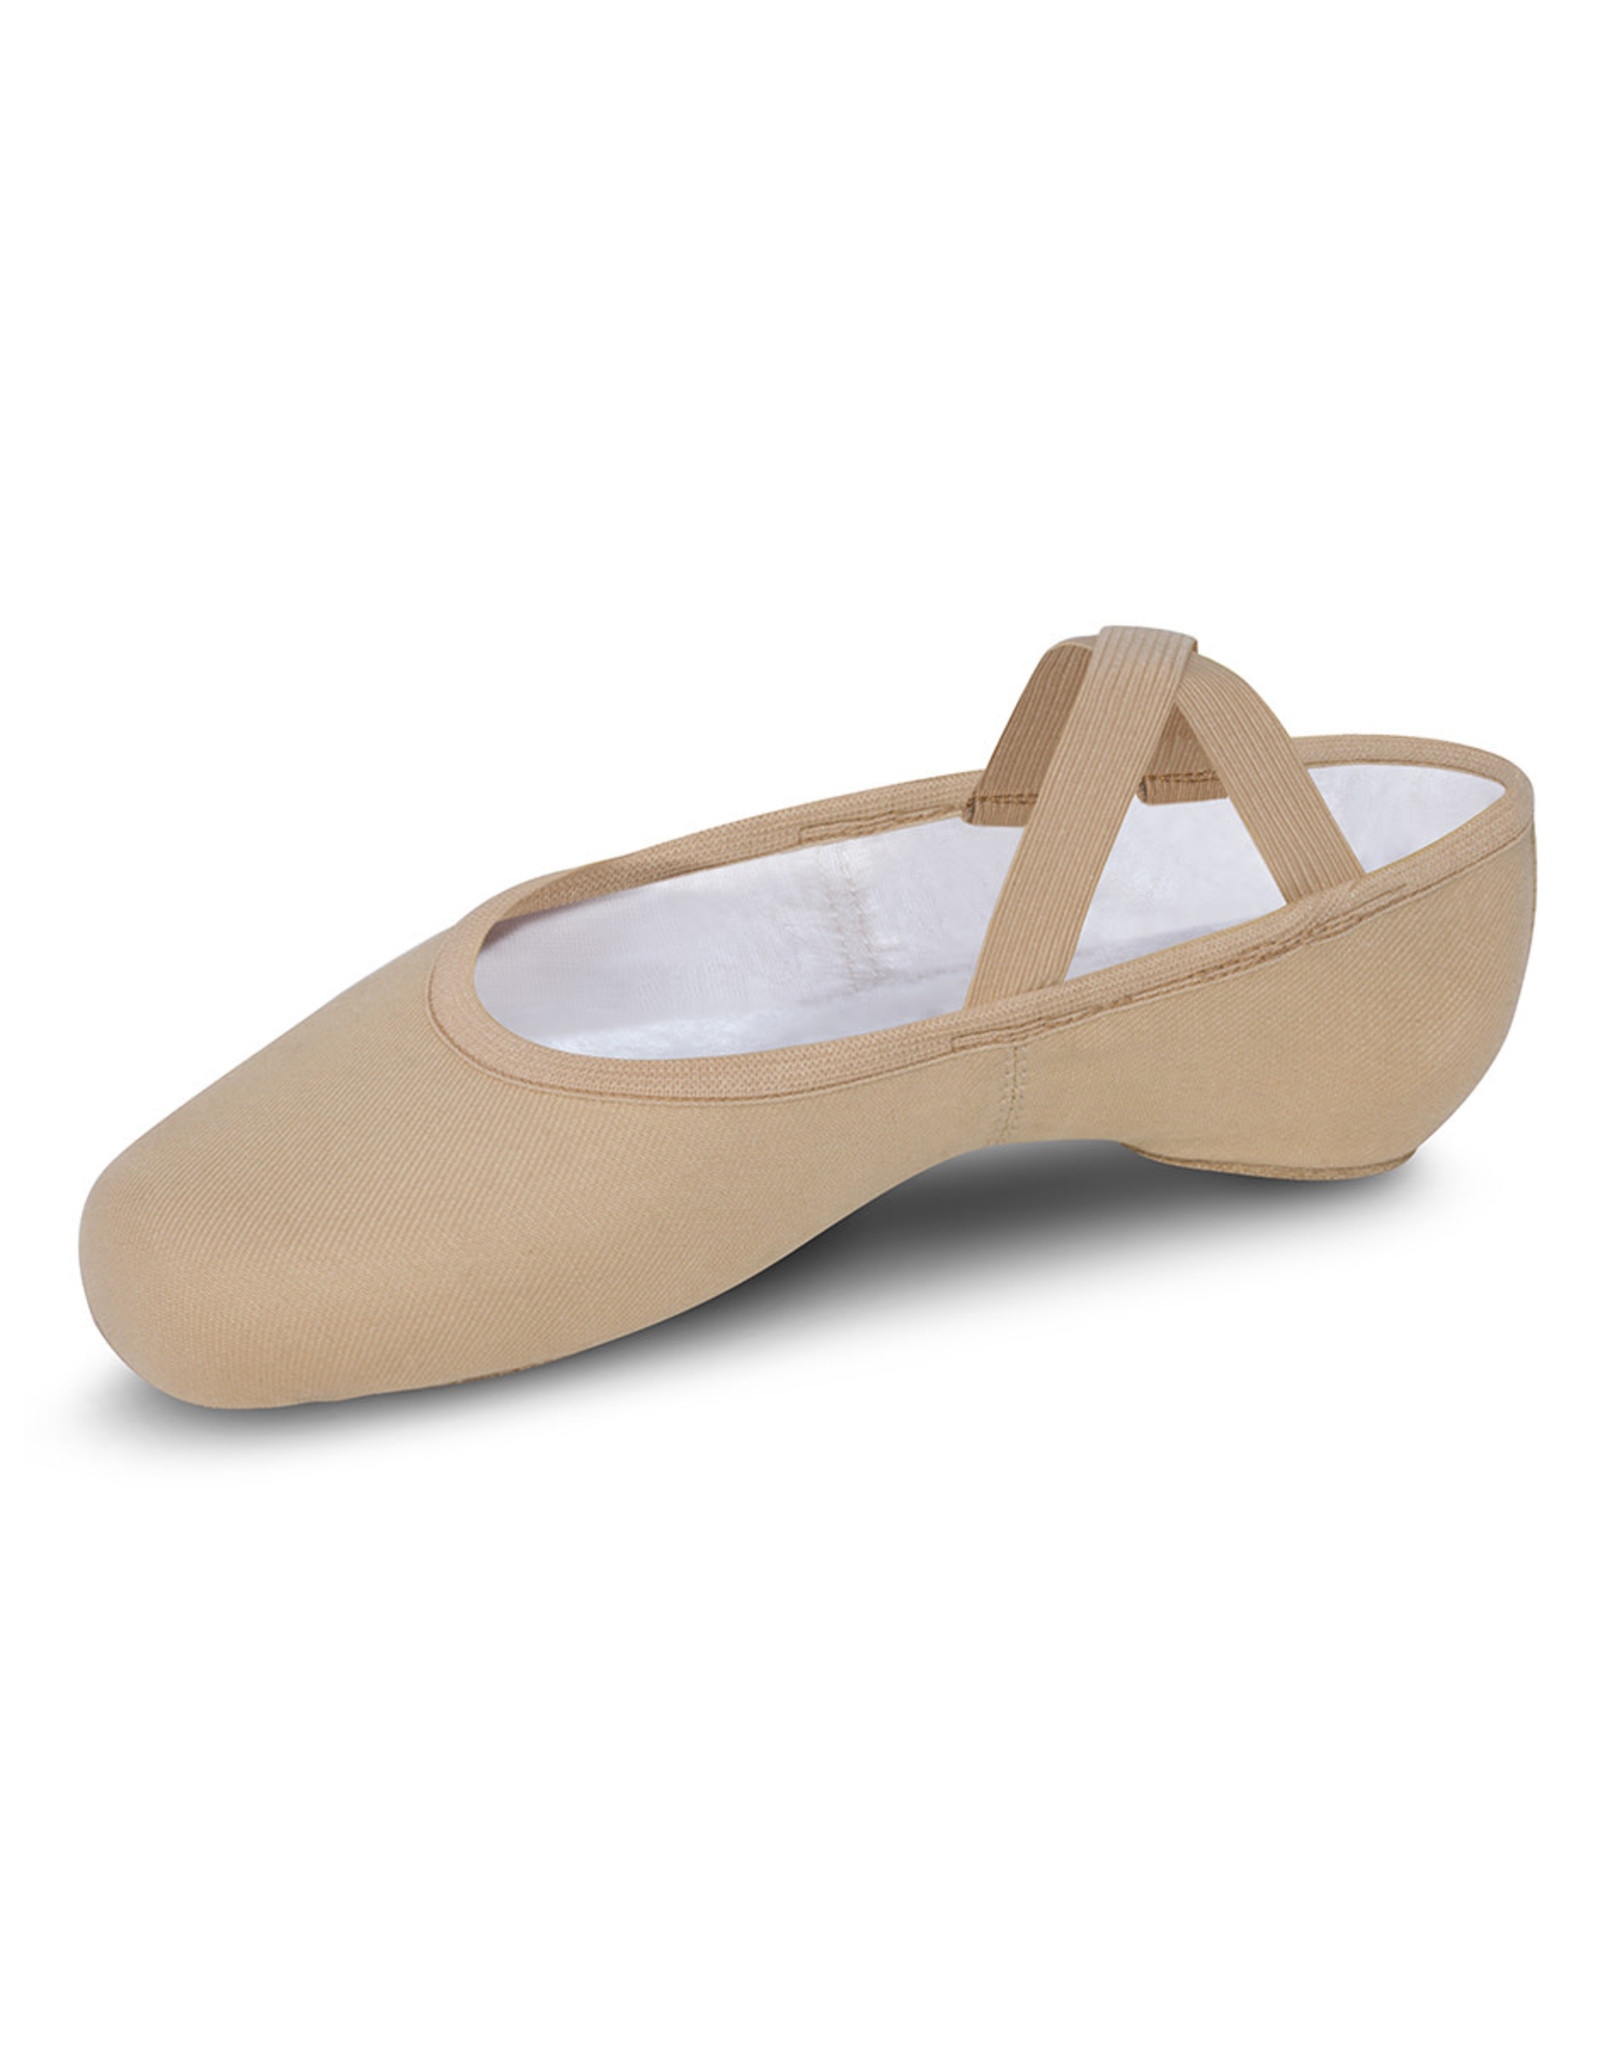 Bloch / Mirella Performa Ballet Shoe (284L) Sand